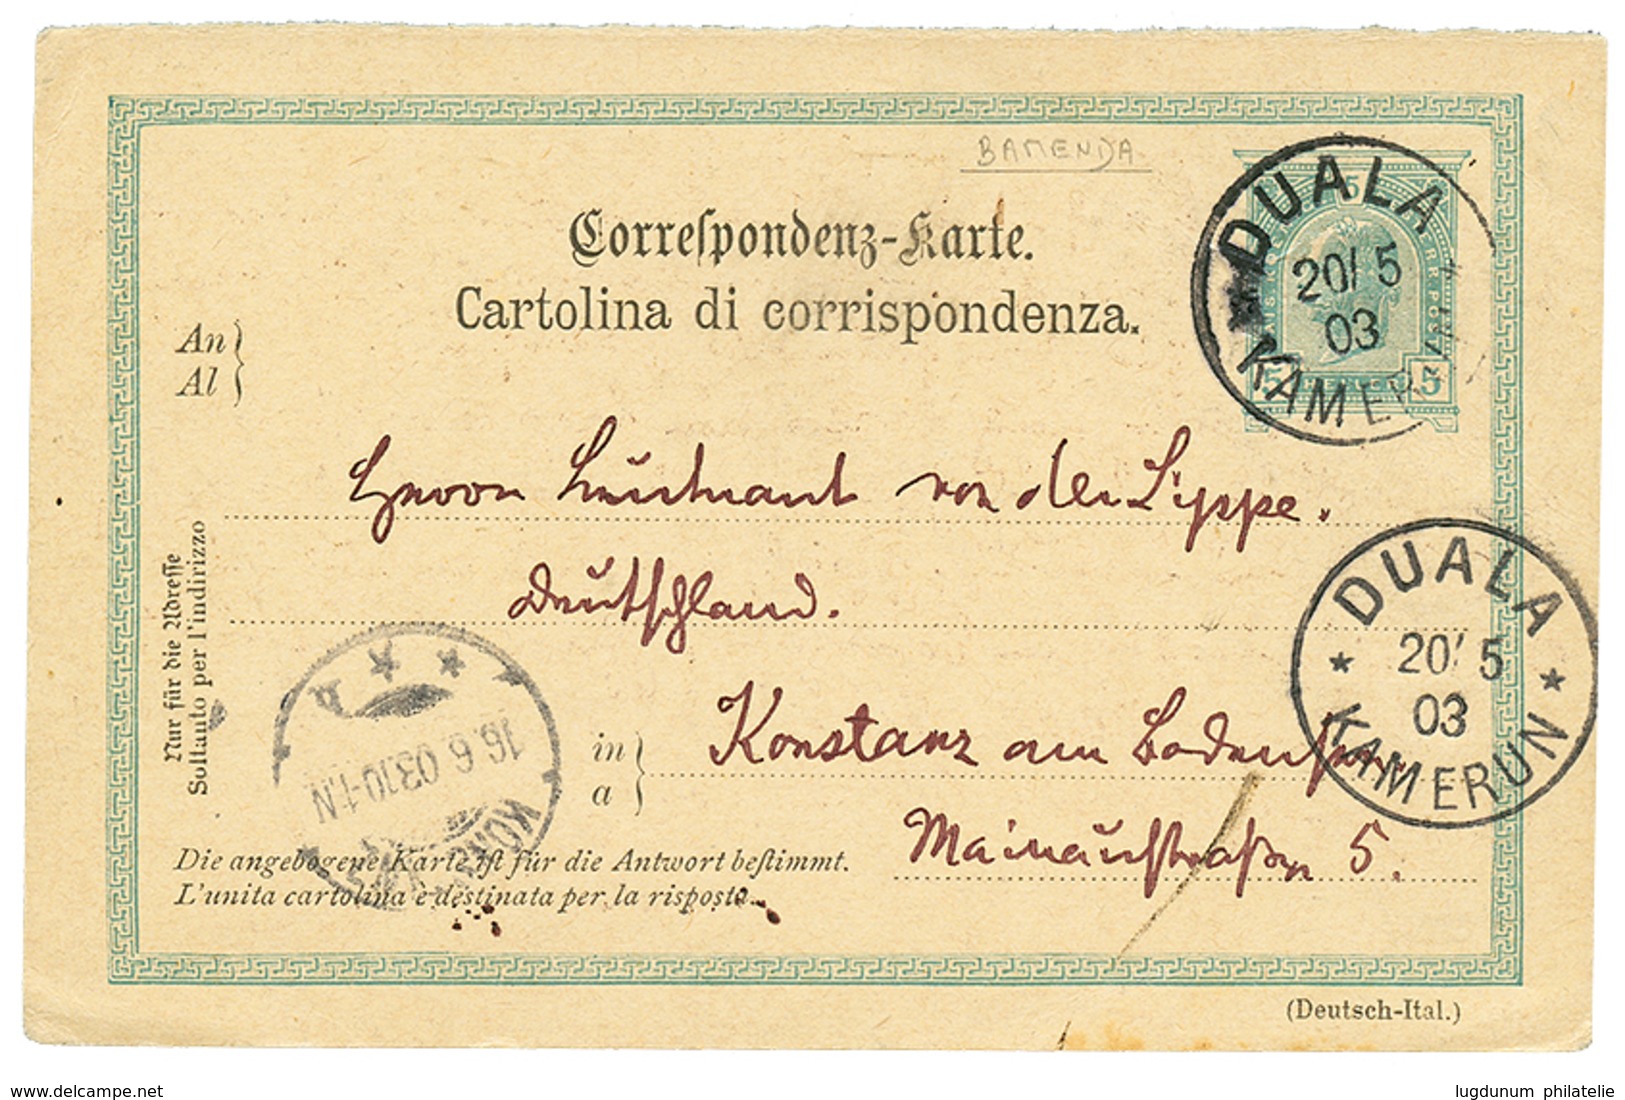 "BAMENDA - Precursor" : 1903 AUSTRIA P./Stat. 5h Datelined "BAMENDA"canc. DUALA KAMERUN To KONSTANZ. BAMENDA POST OFFICE - Kamerun